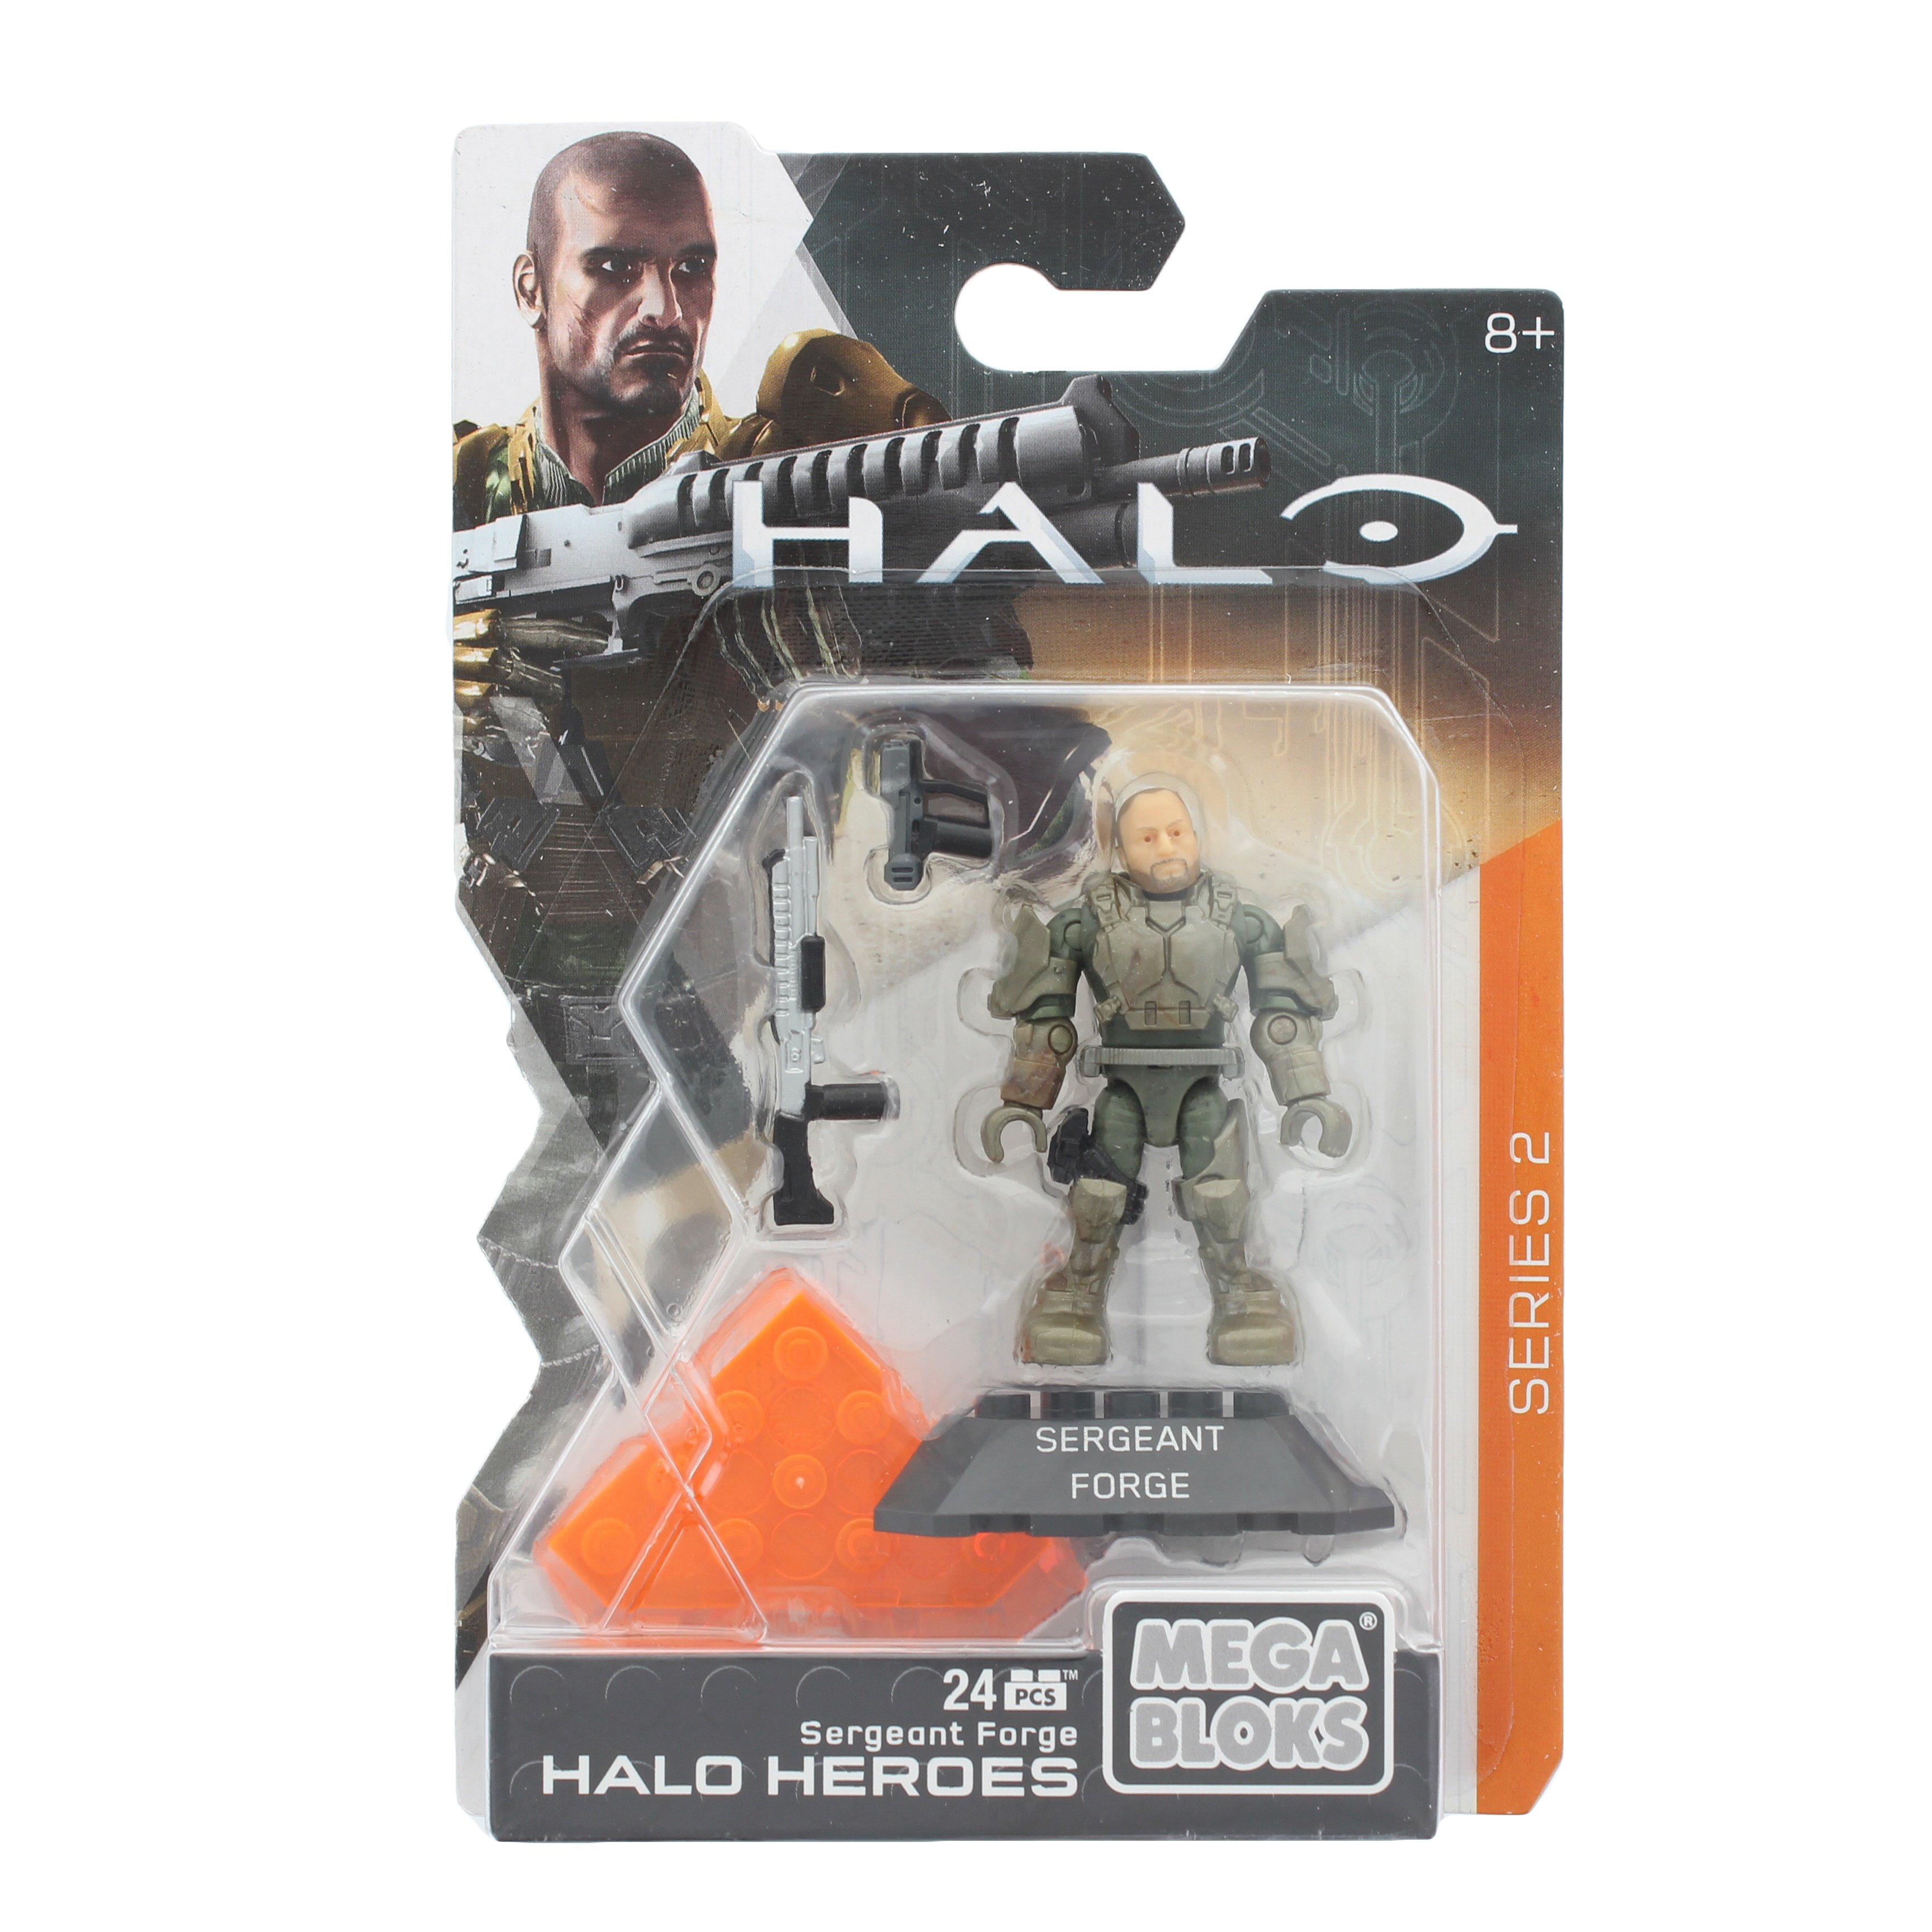 Mega Bloks Halo Heroes Series 2 Sergeant Forge Dpj77 for sale online 